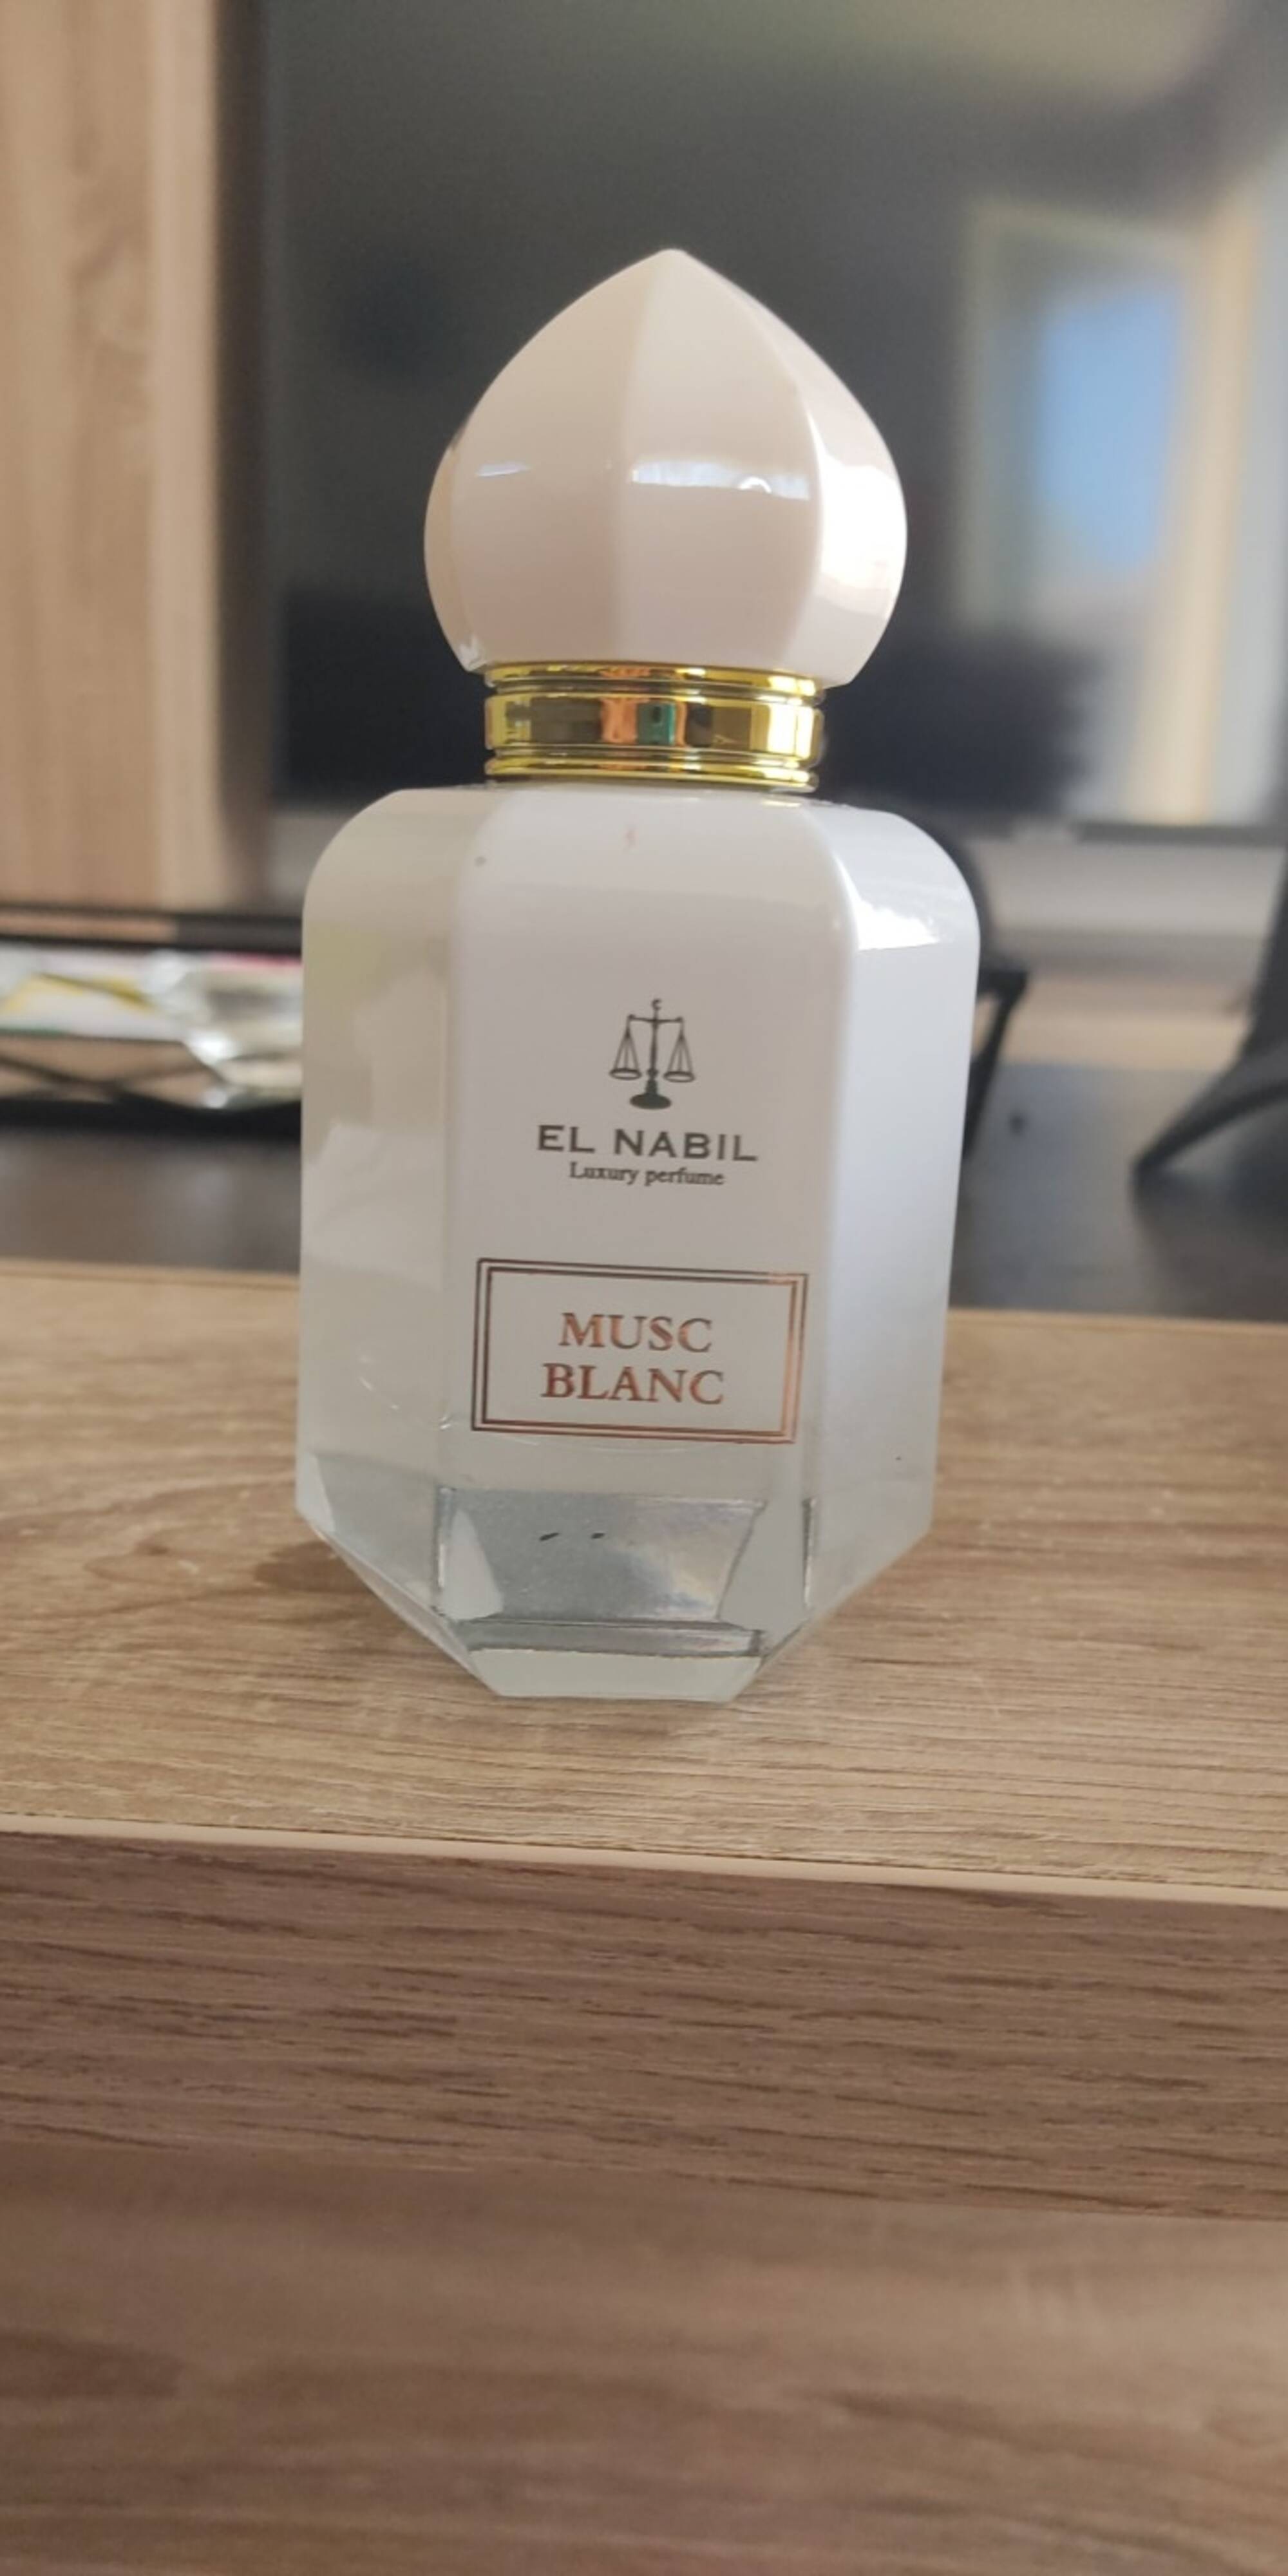 EL NABIL - Musc blanc - Parfum